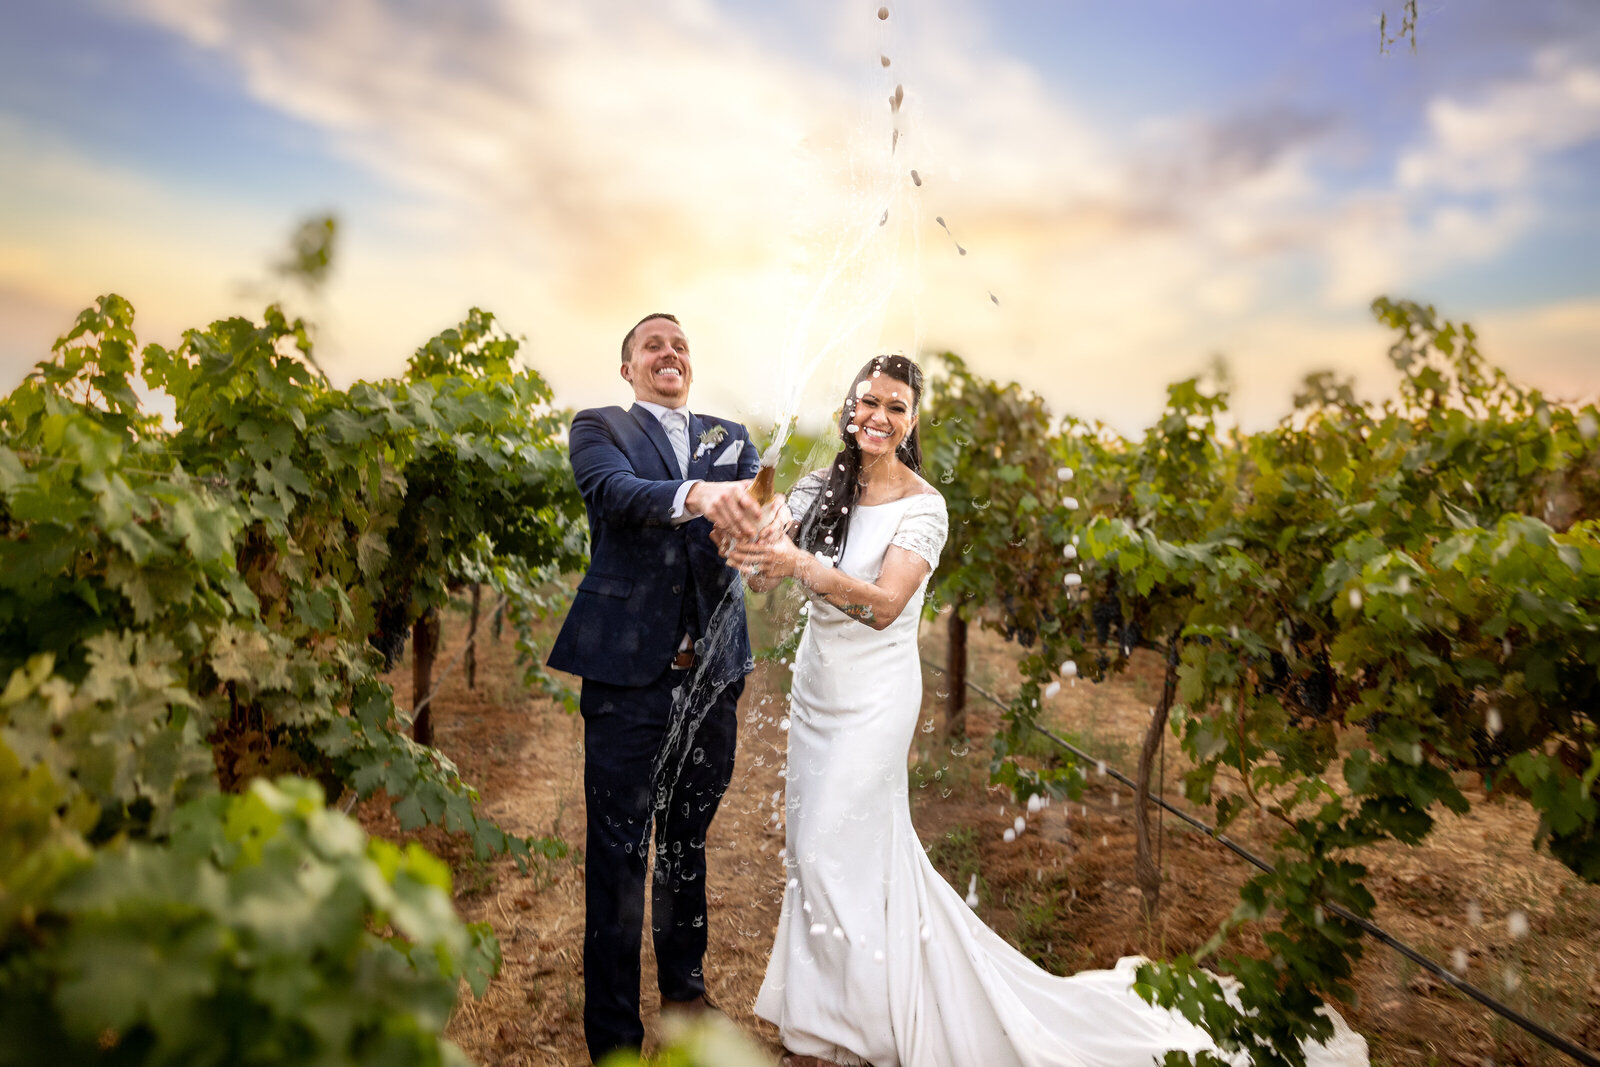 bride and groom celebrate marriage in vineyard in Sacramento, CA. wedding photo taken by philippe studio pro